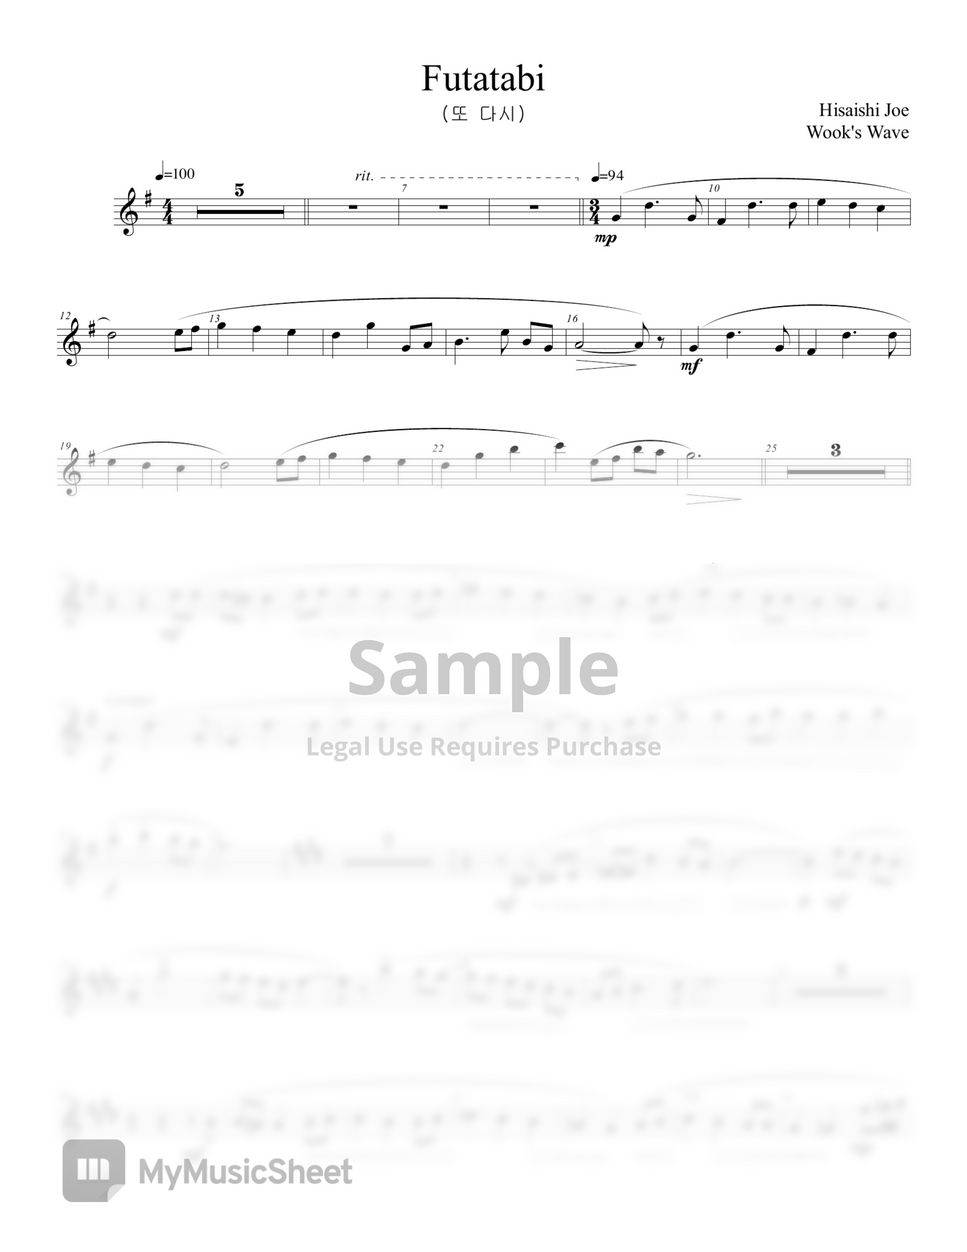 Hisaishi Joe - Futatabi(Flute and Inst. Track) by Cloudy Wook